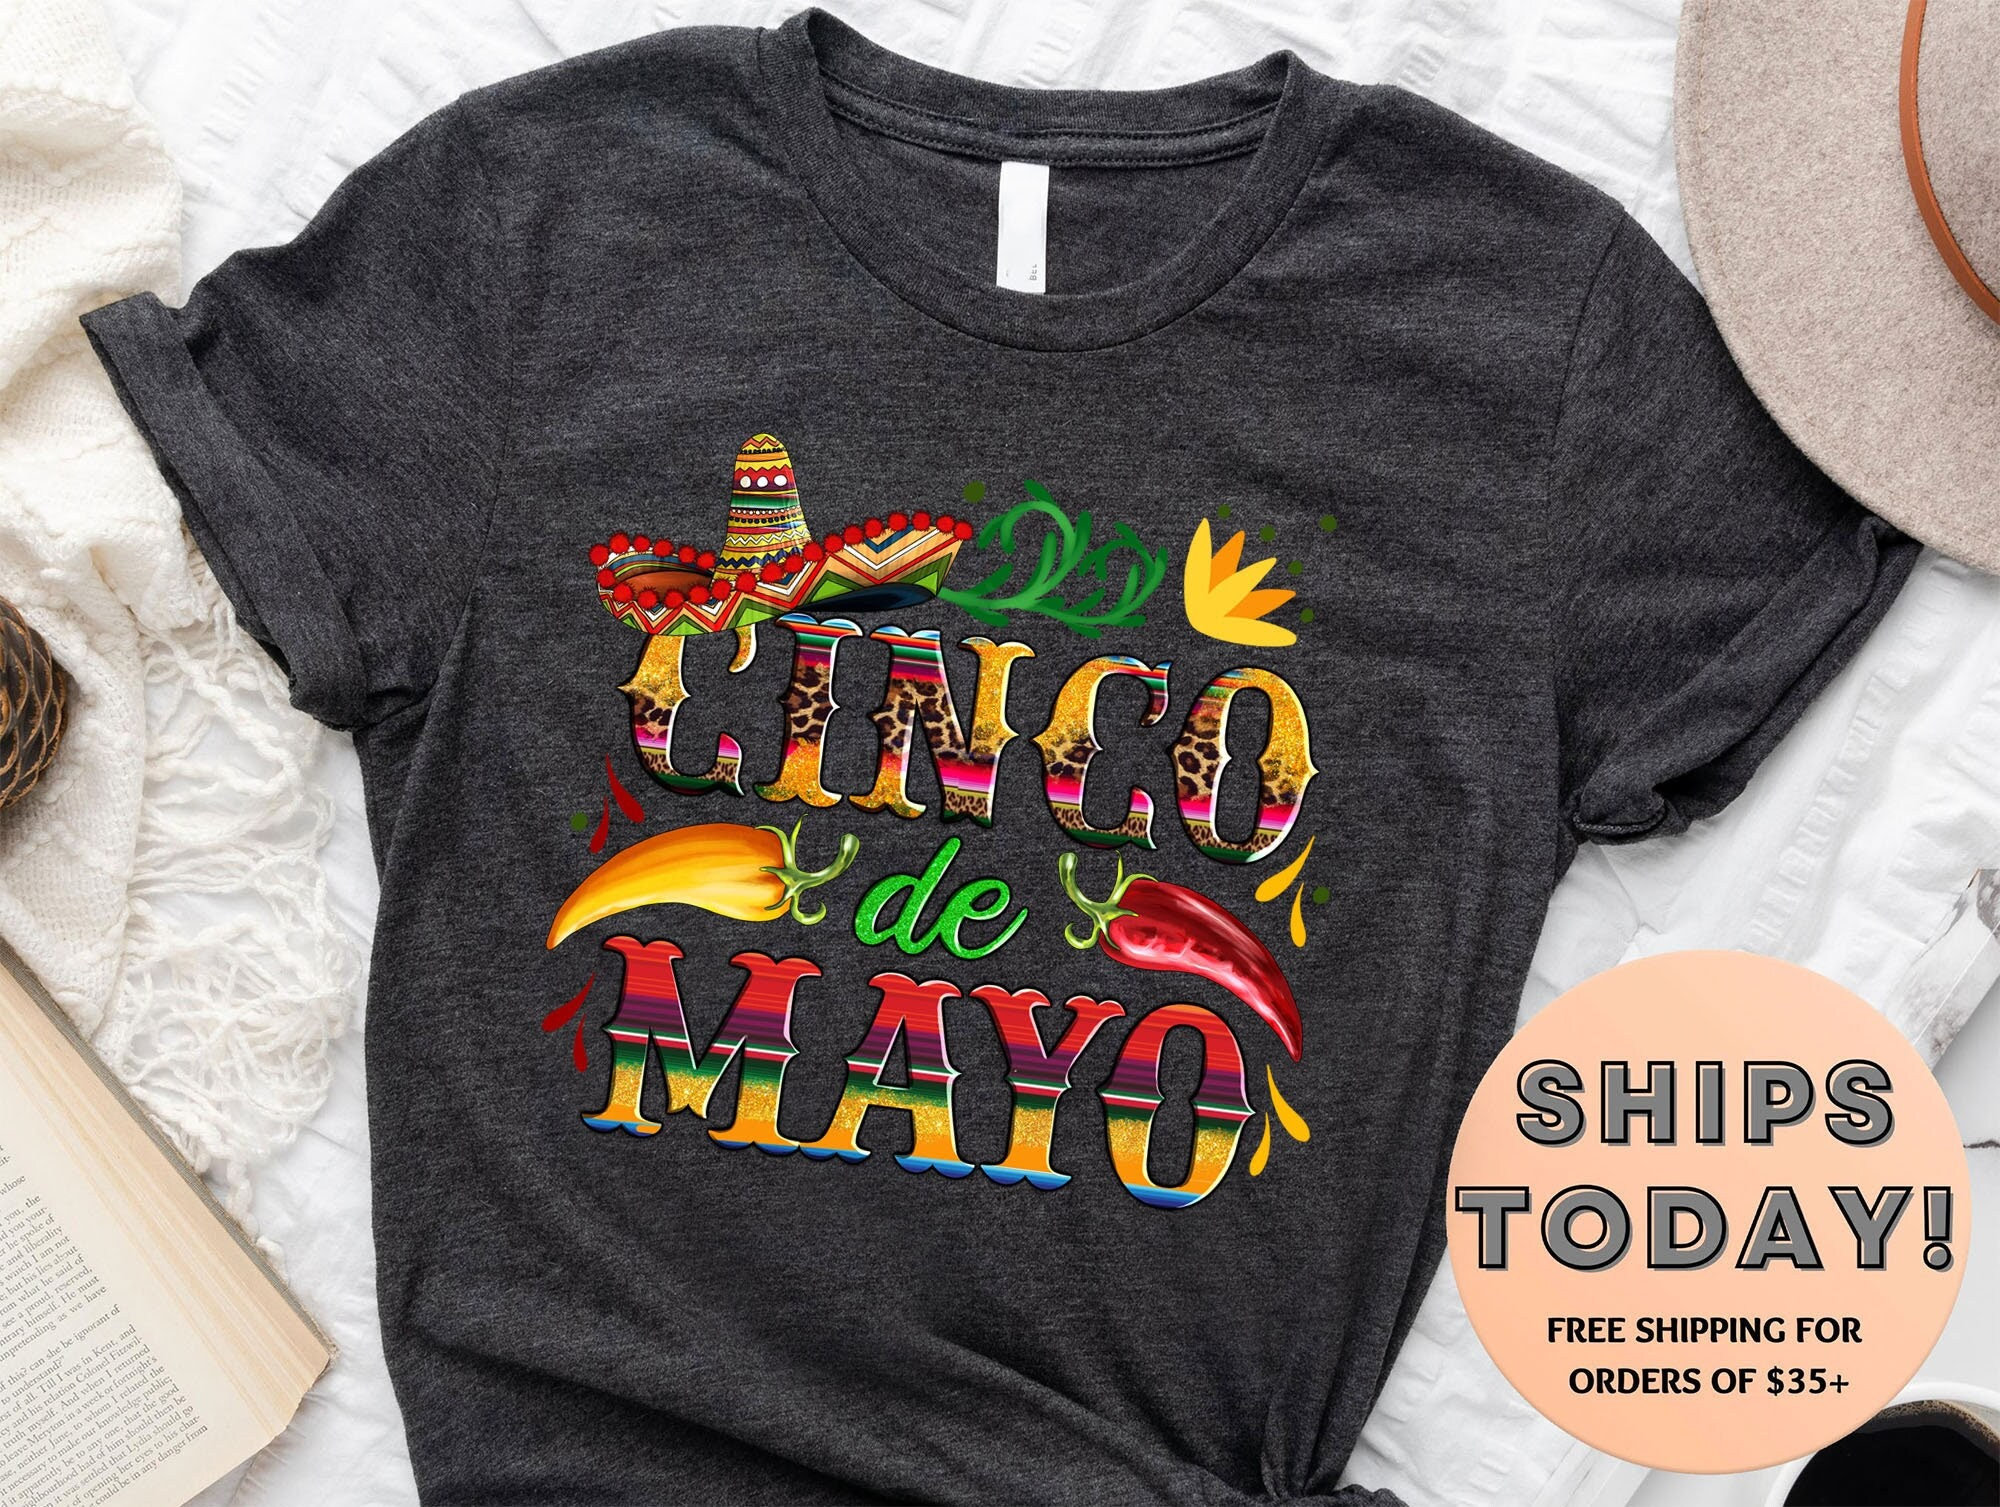 CHINCO DE MAYO MEXICAN' Men's 50/50 T-Shirt